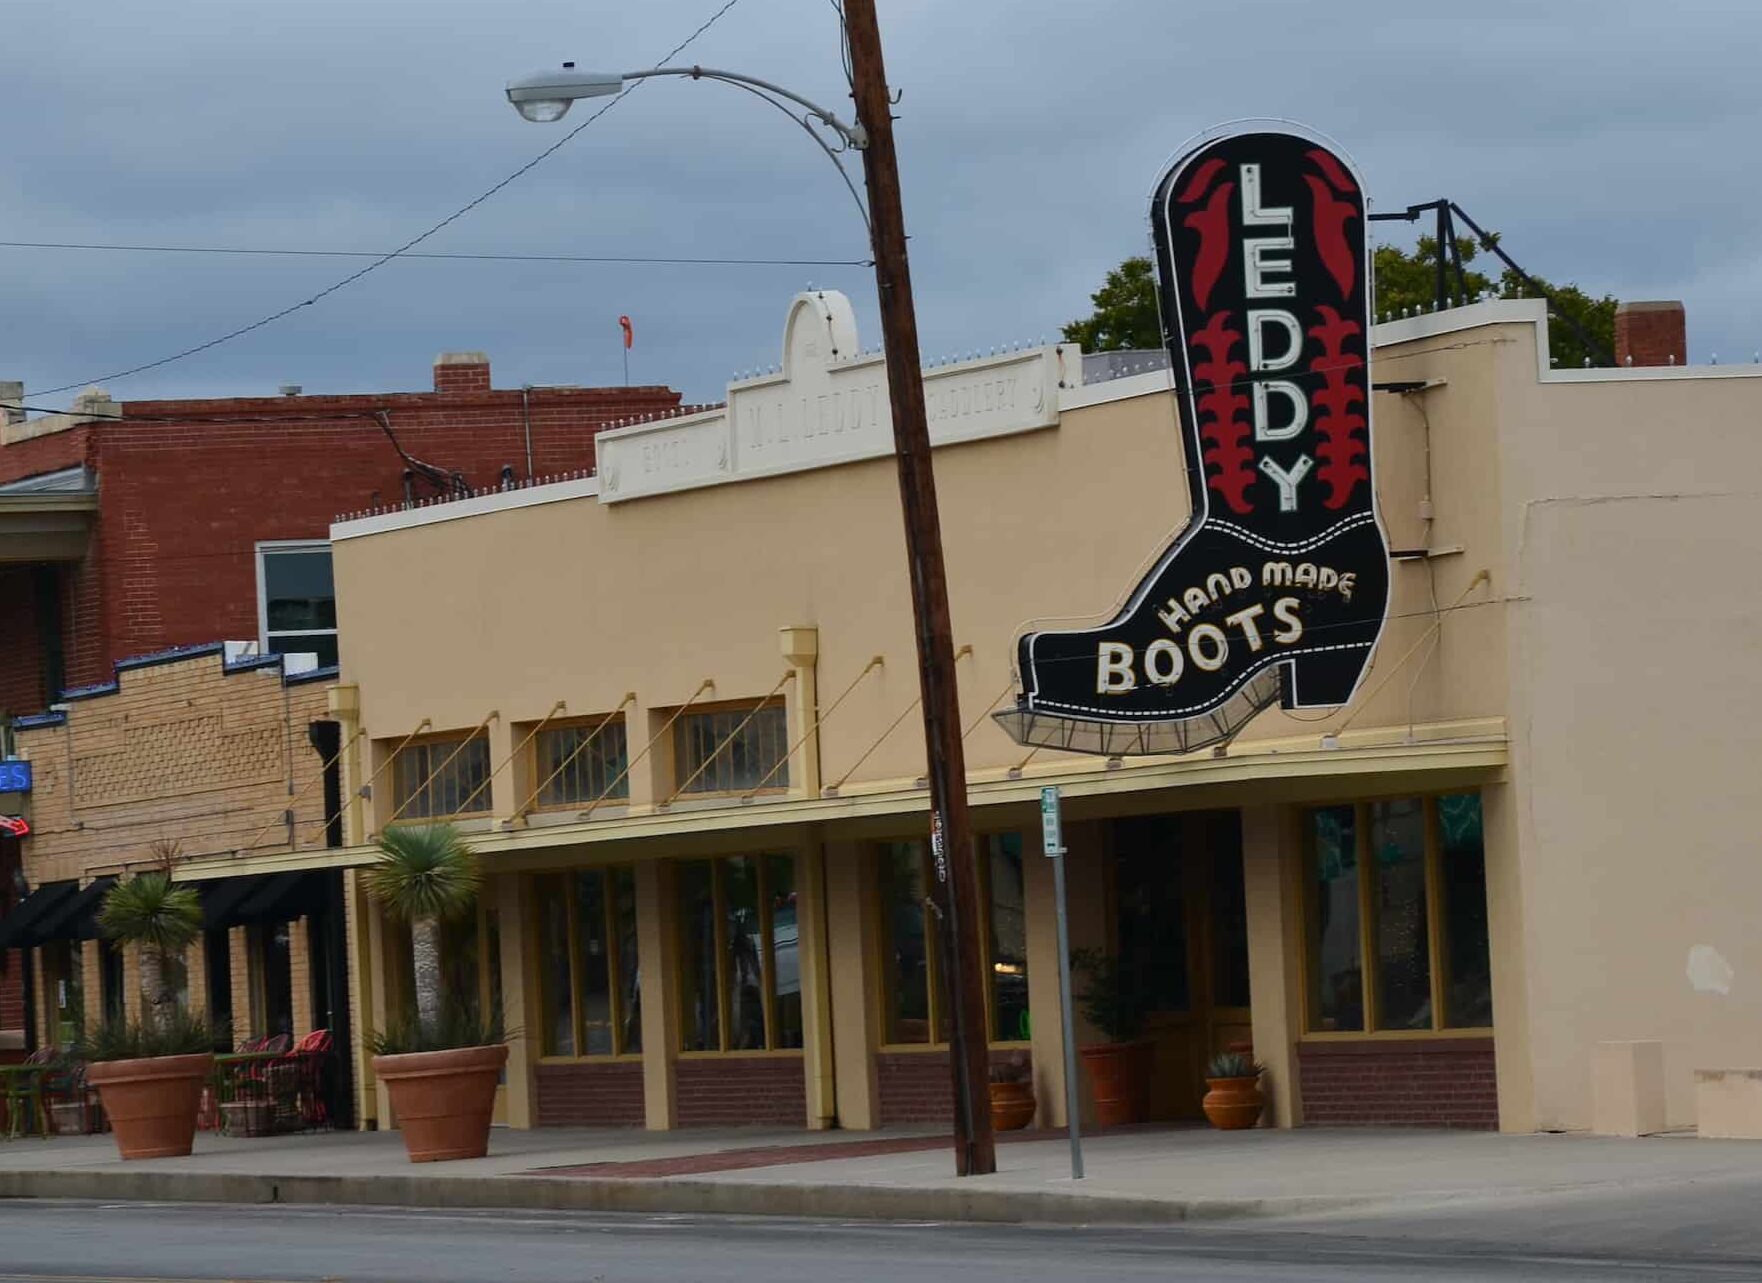 Leddy Boots in San Angelo, Texas